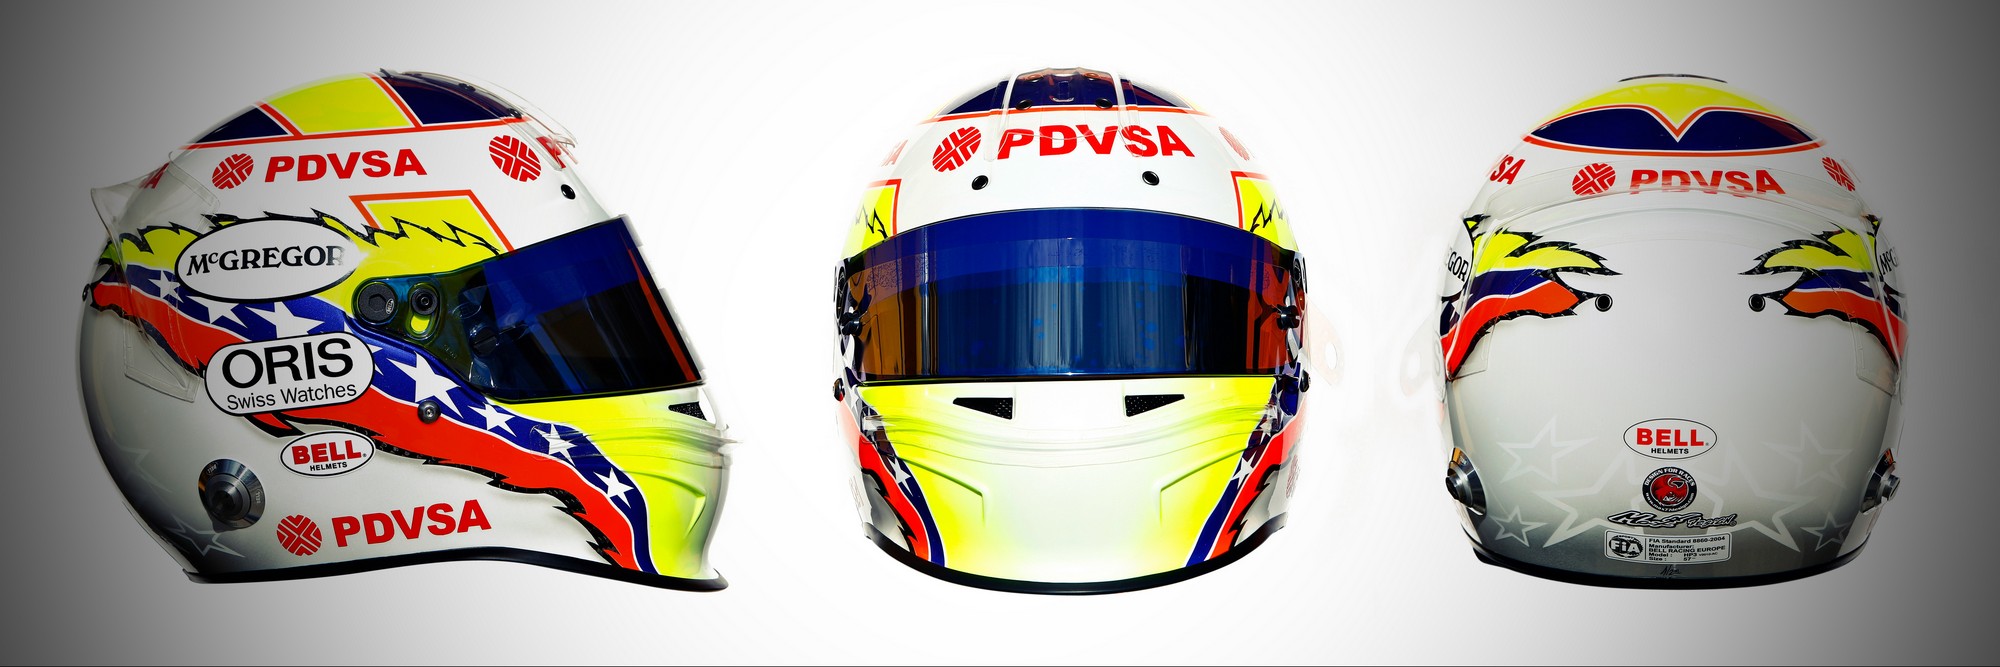 Шлем Пастора Мальдонадо на сезон 2011 года | 2011 helmet of Pastor Maldonado